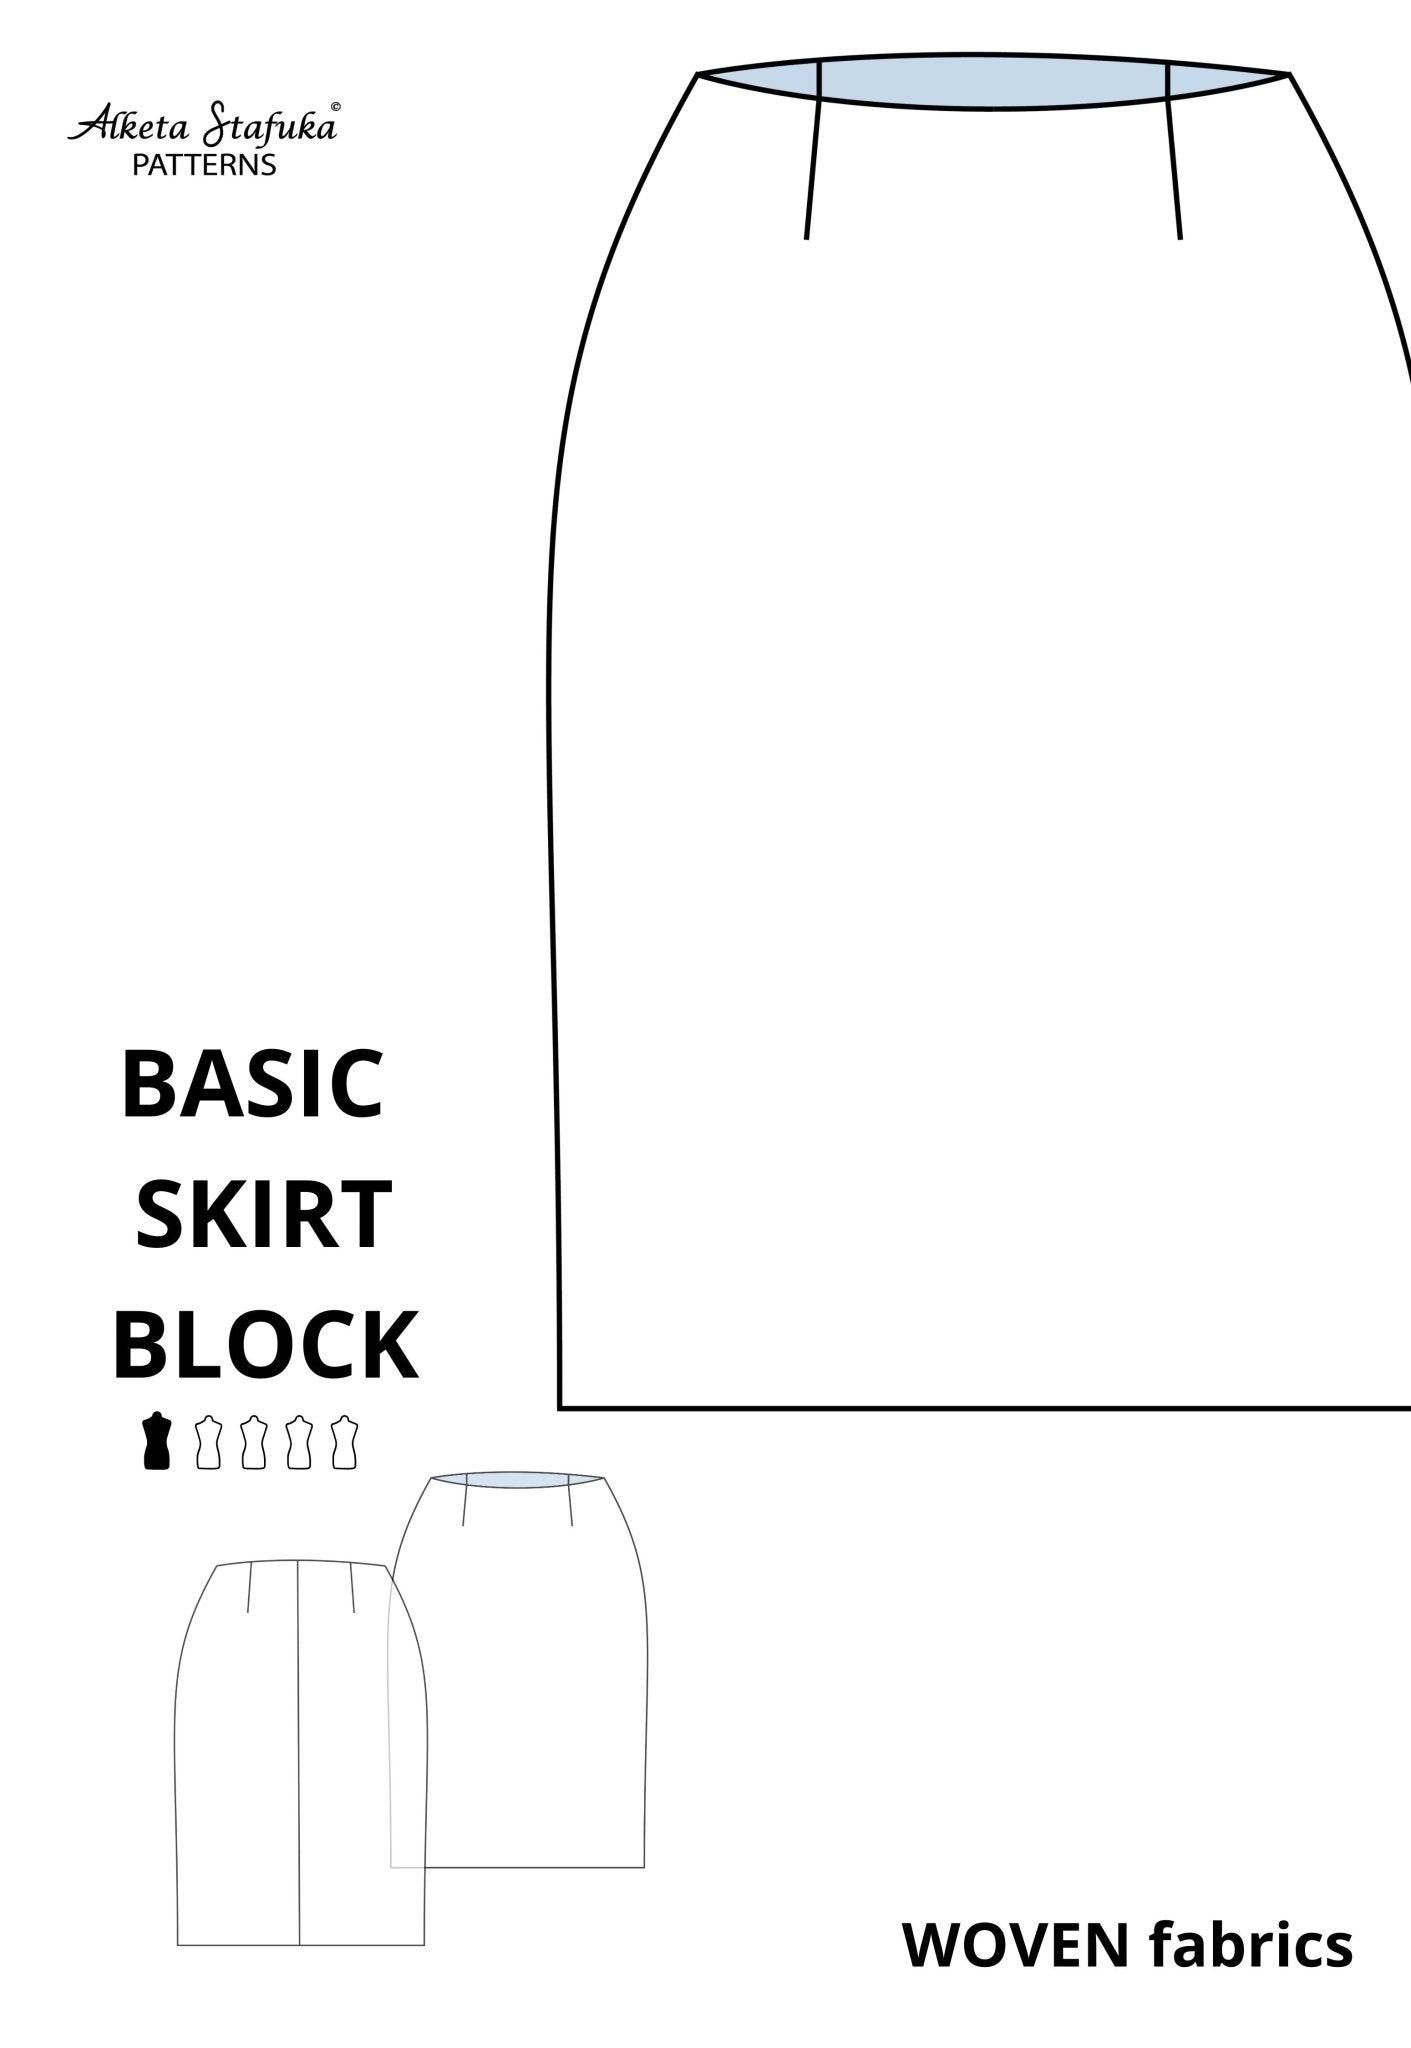 Basic Skirt Block Sewing Pattern for WOVEN fabrics - AlketaStafukaPatterns